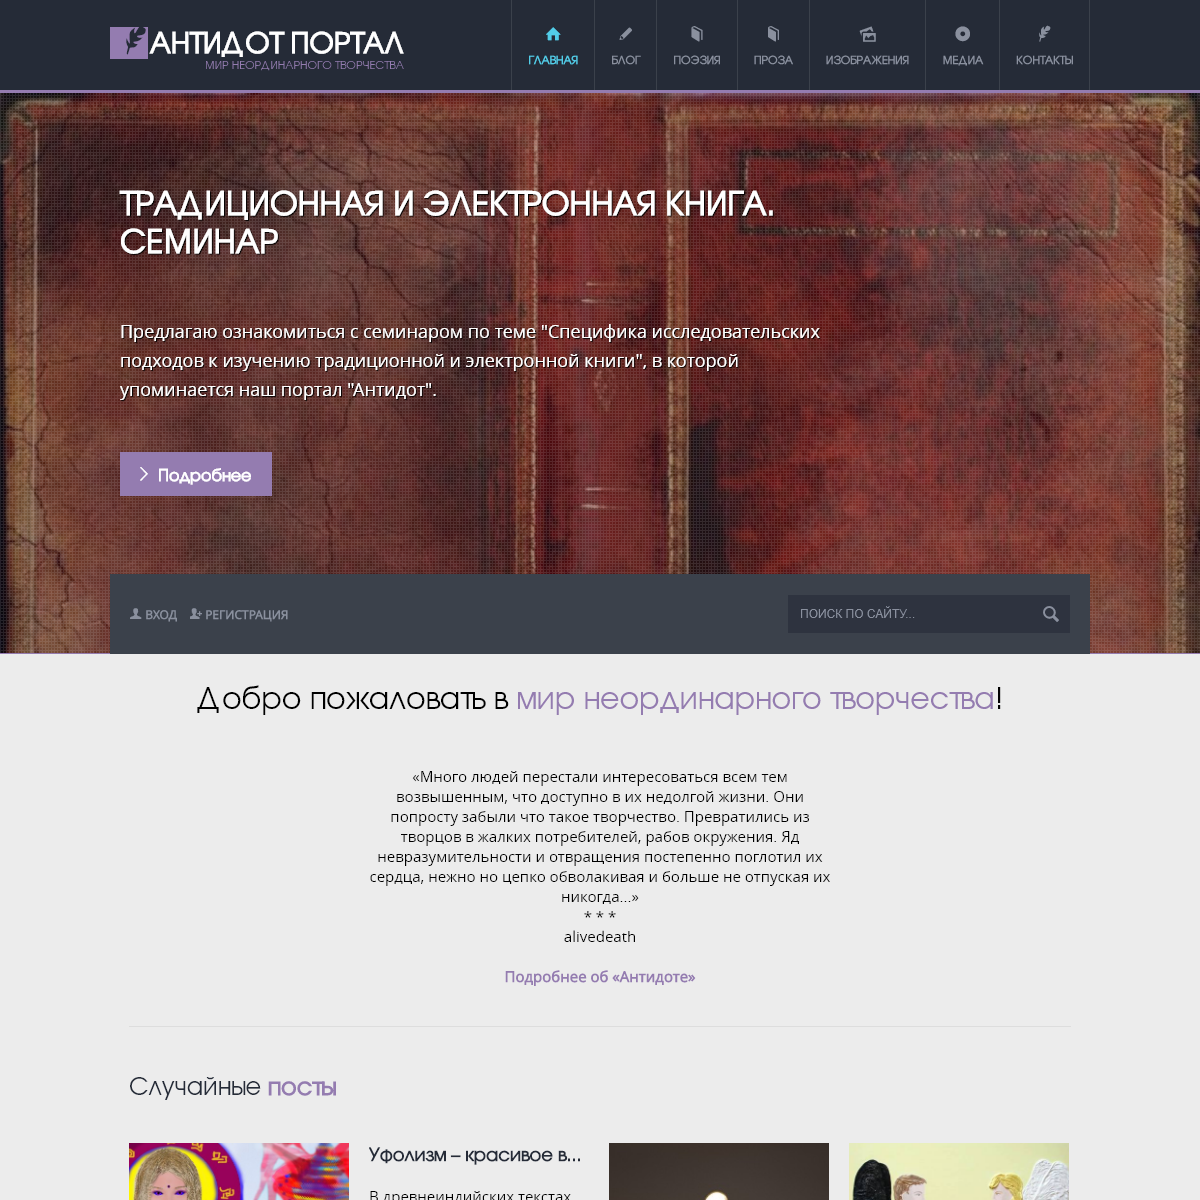 A complete backup of antidotportal.ru